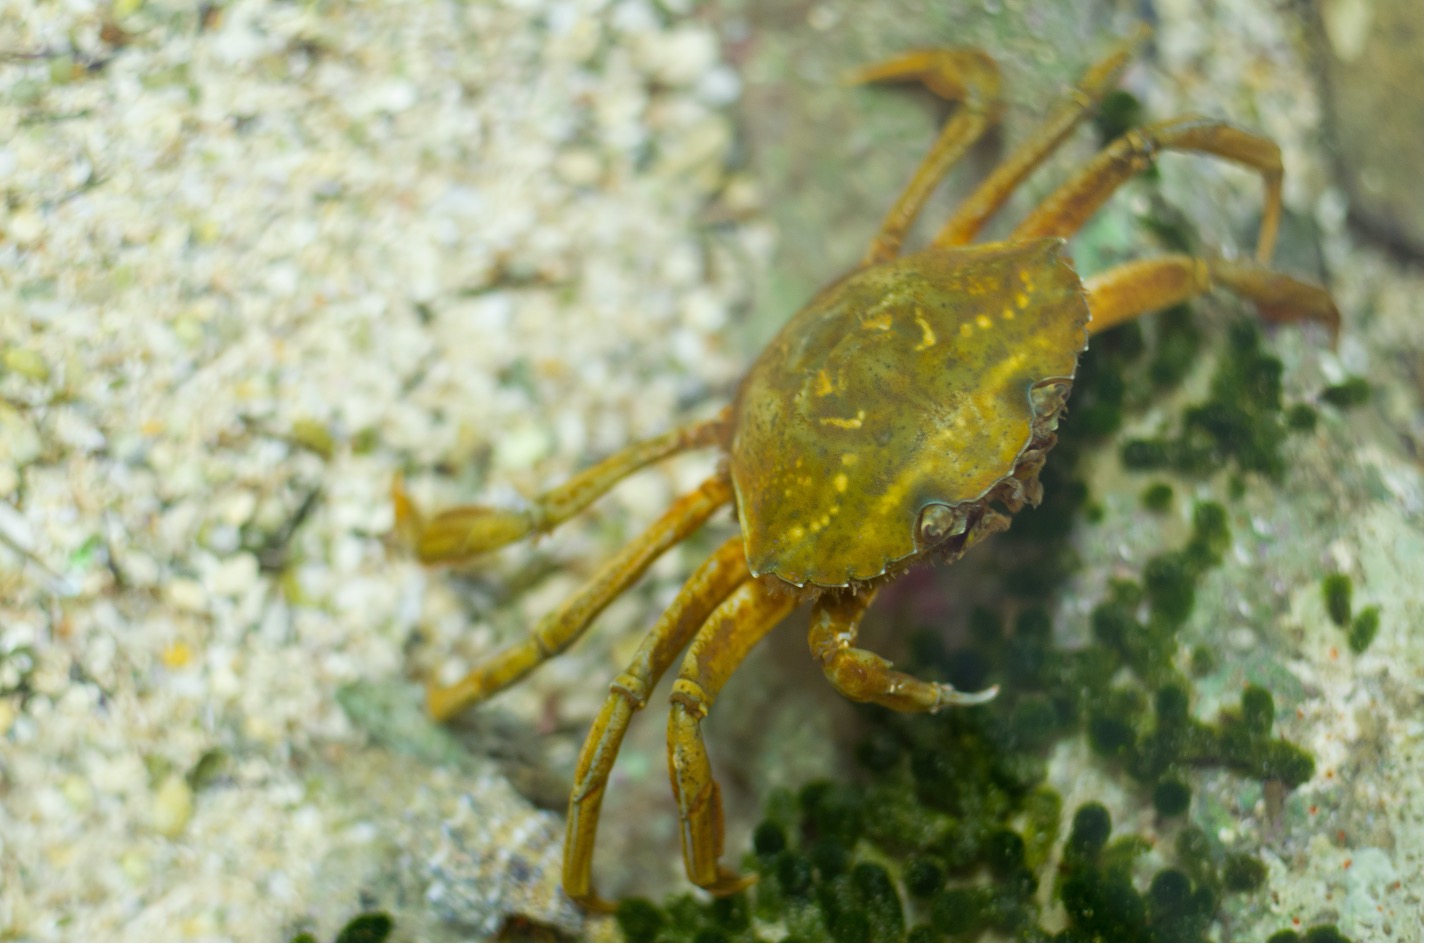 European Green Crab in Canadian waters